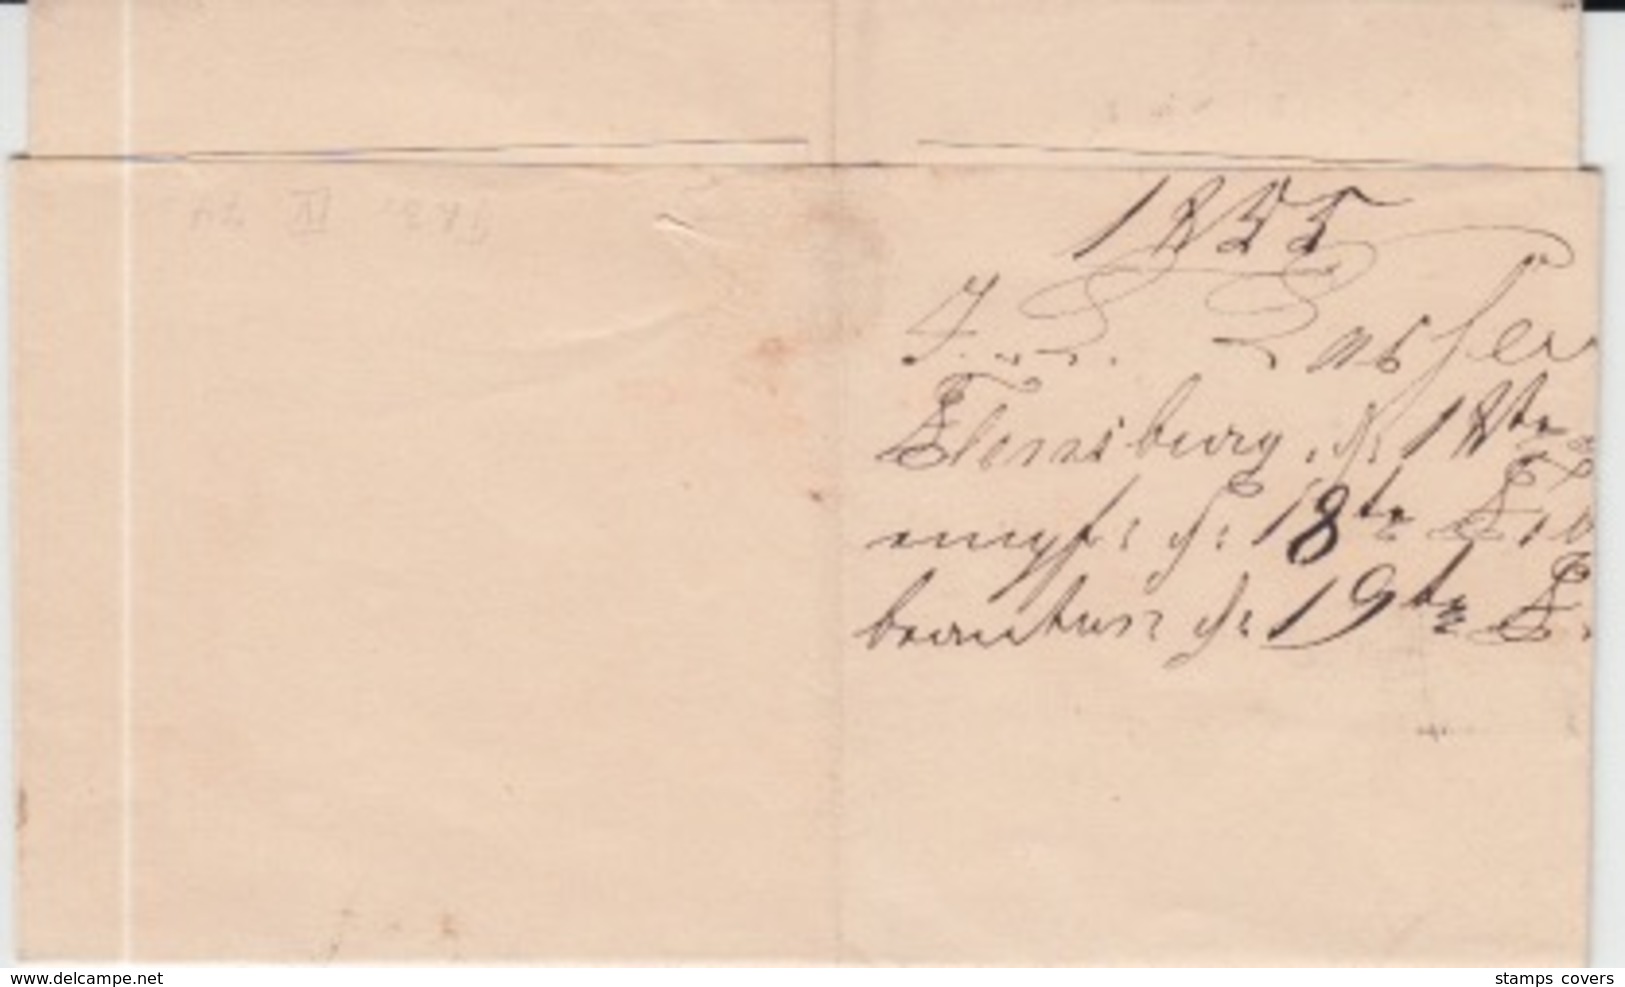 DENMARK MICHEL 1 USED COVER 18/02/1855 FLENSBORG (FLENSBOURG) TO SLESVIG (SCHLESWIG)) - Storia Postale